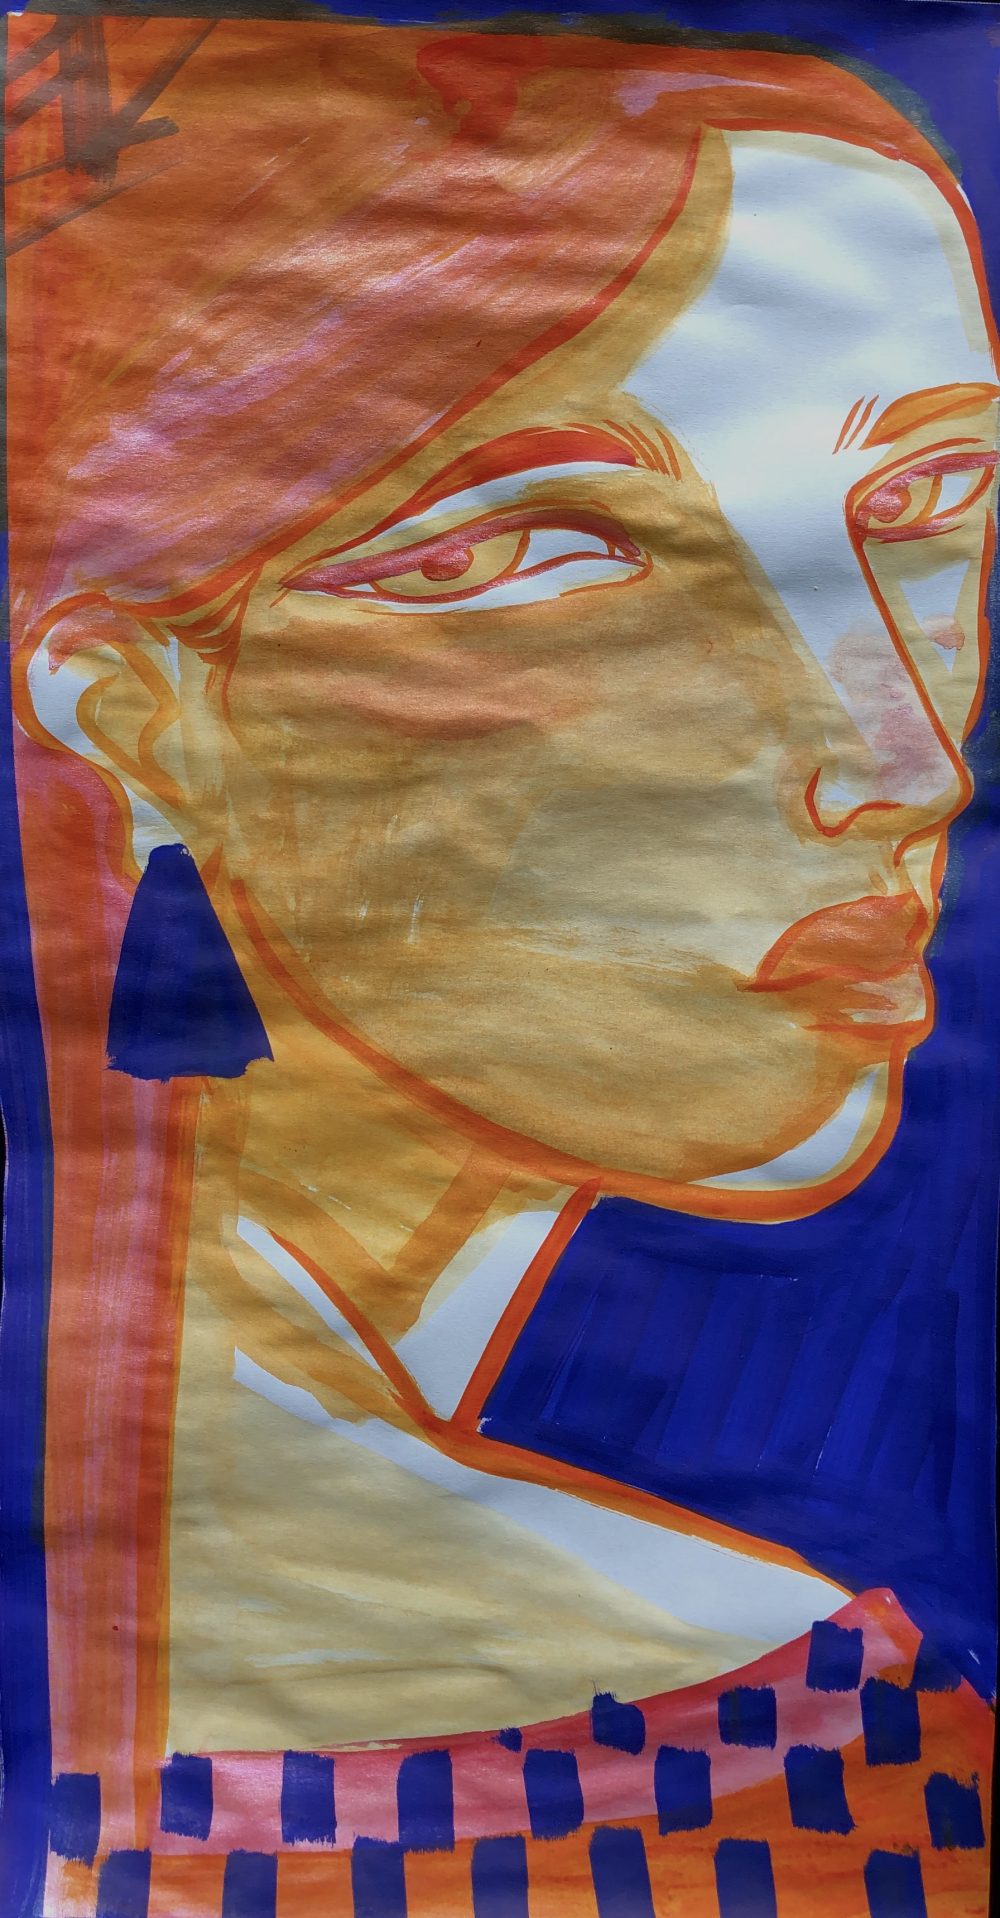 Lou Jenkins-Law, Orange Woman, 2020, paint pen, ink, watercolor on paper, 20" x 10"